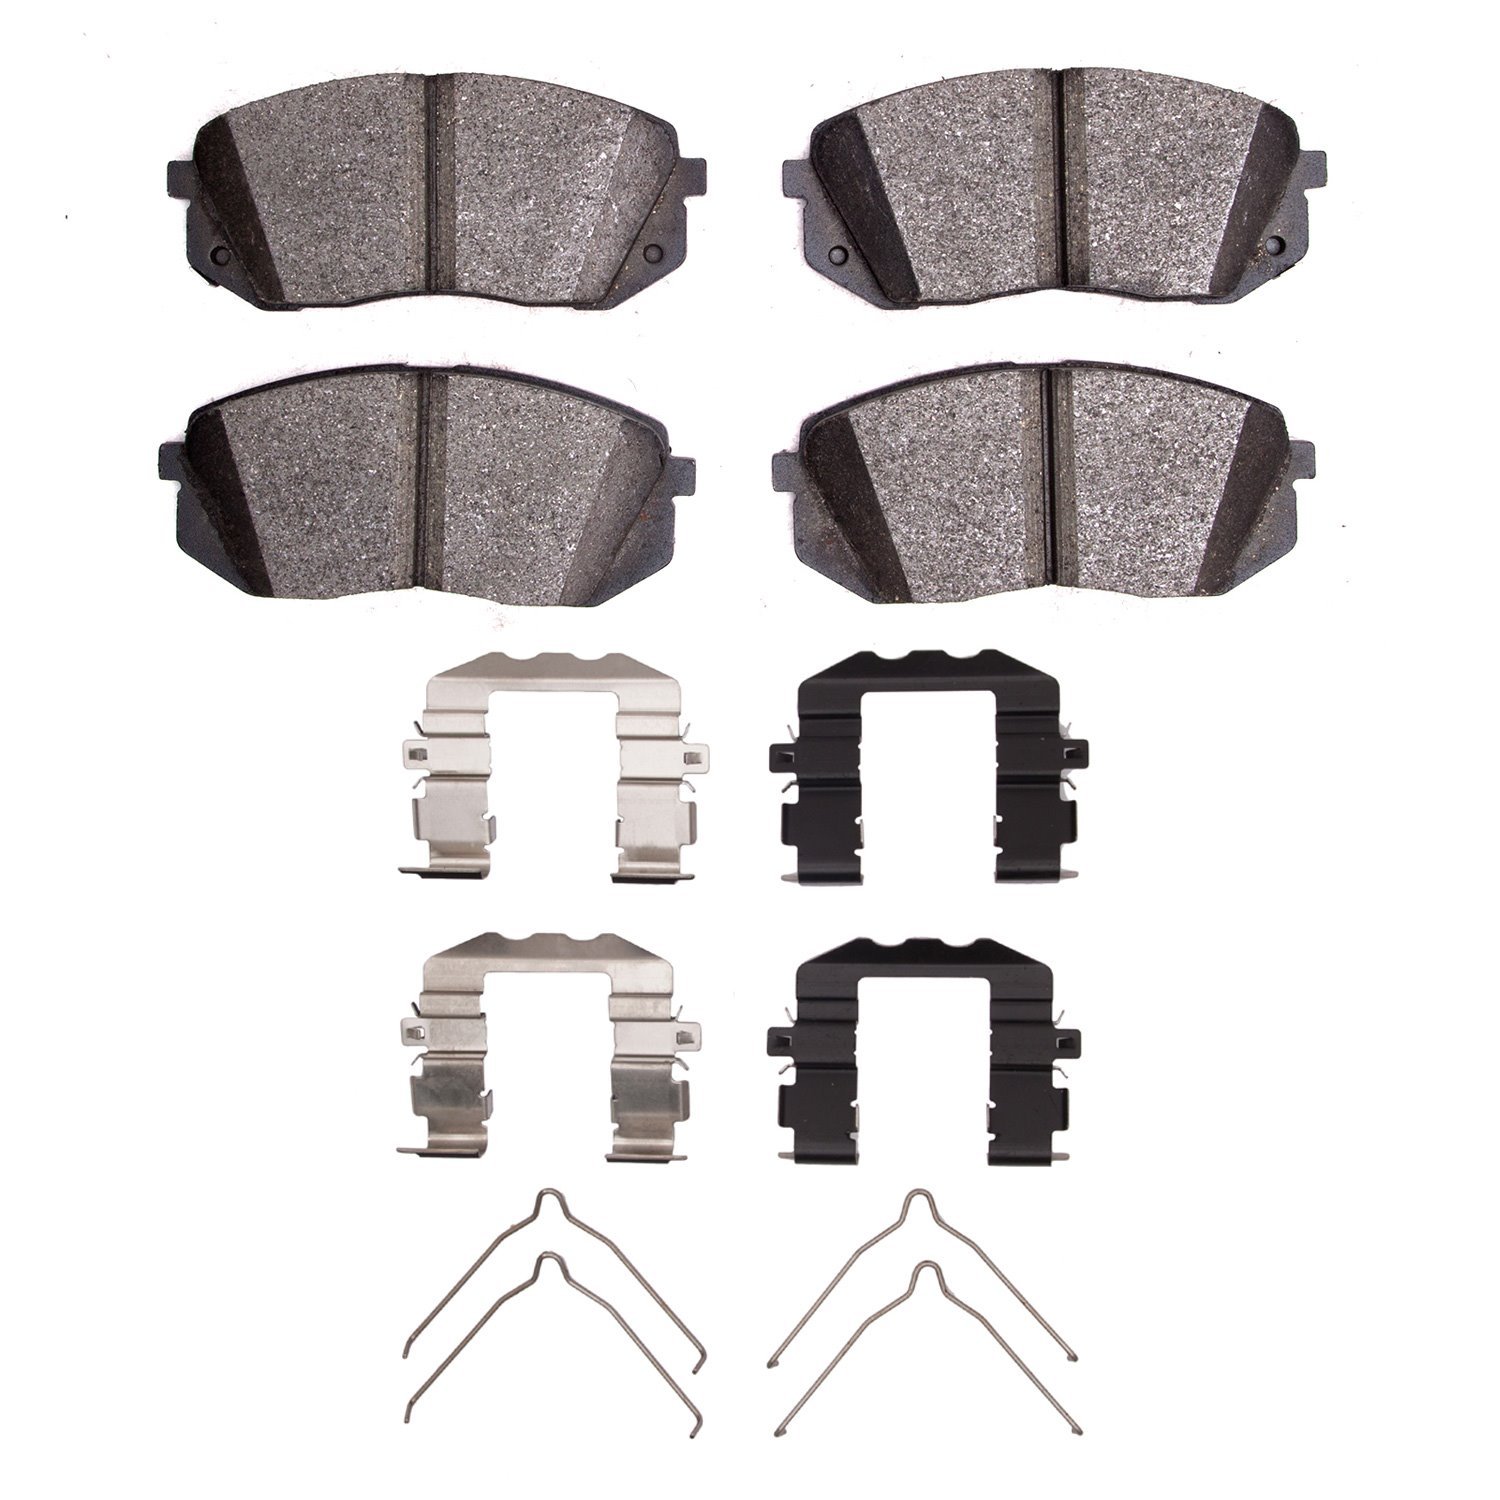 1310-1826-01 3000-Series Ceramic Brake Pads & Hardware Kit, Fits Select Kia/Hyundai/Genesis, Position: Front